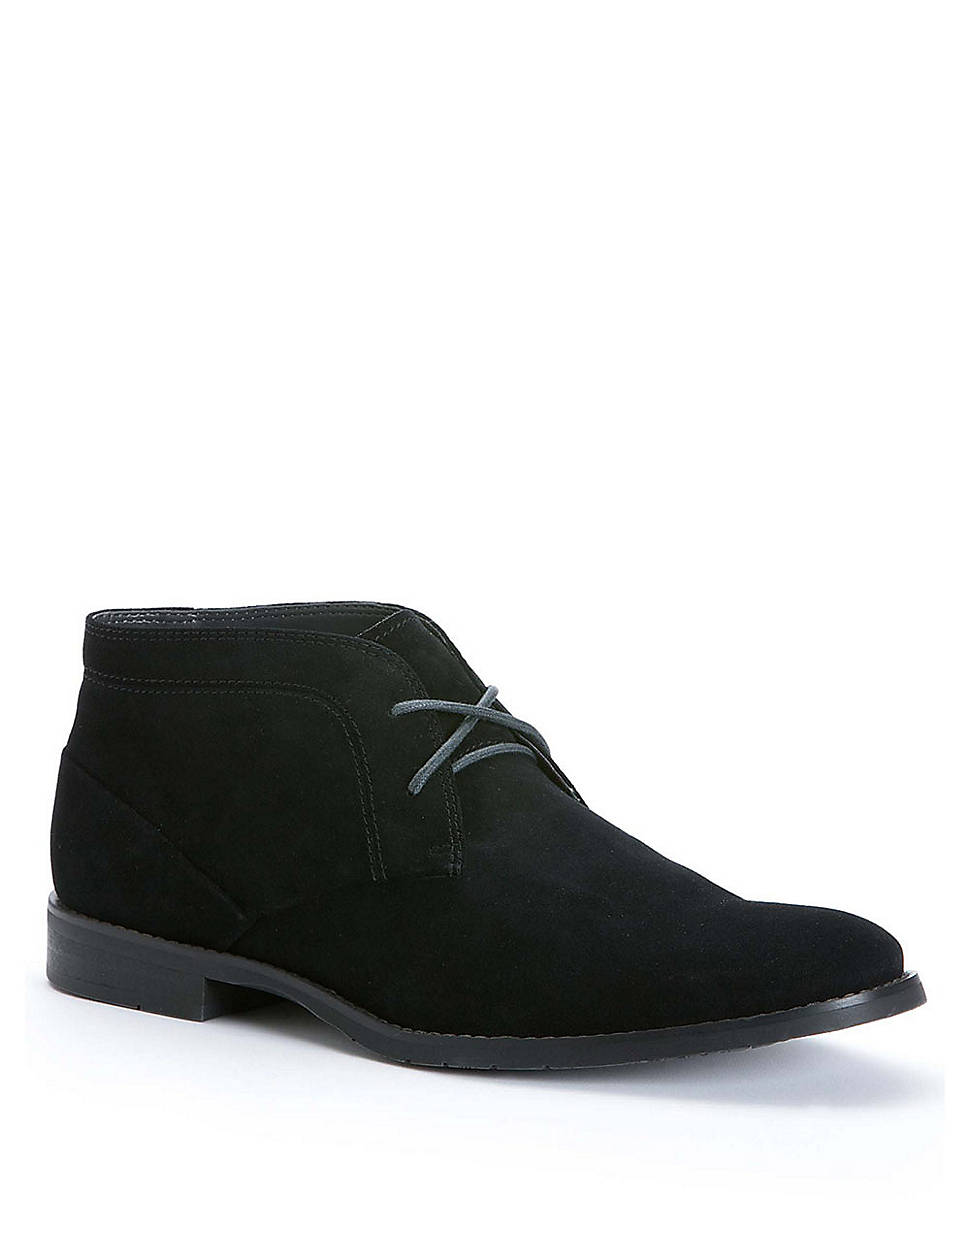 Lyst - Calvin Klein Wilson Chukka Boots in Black for Men